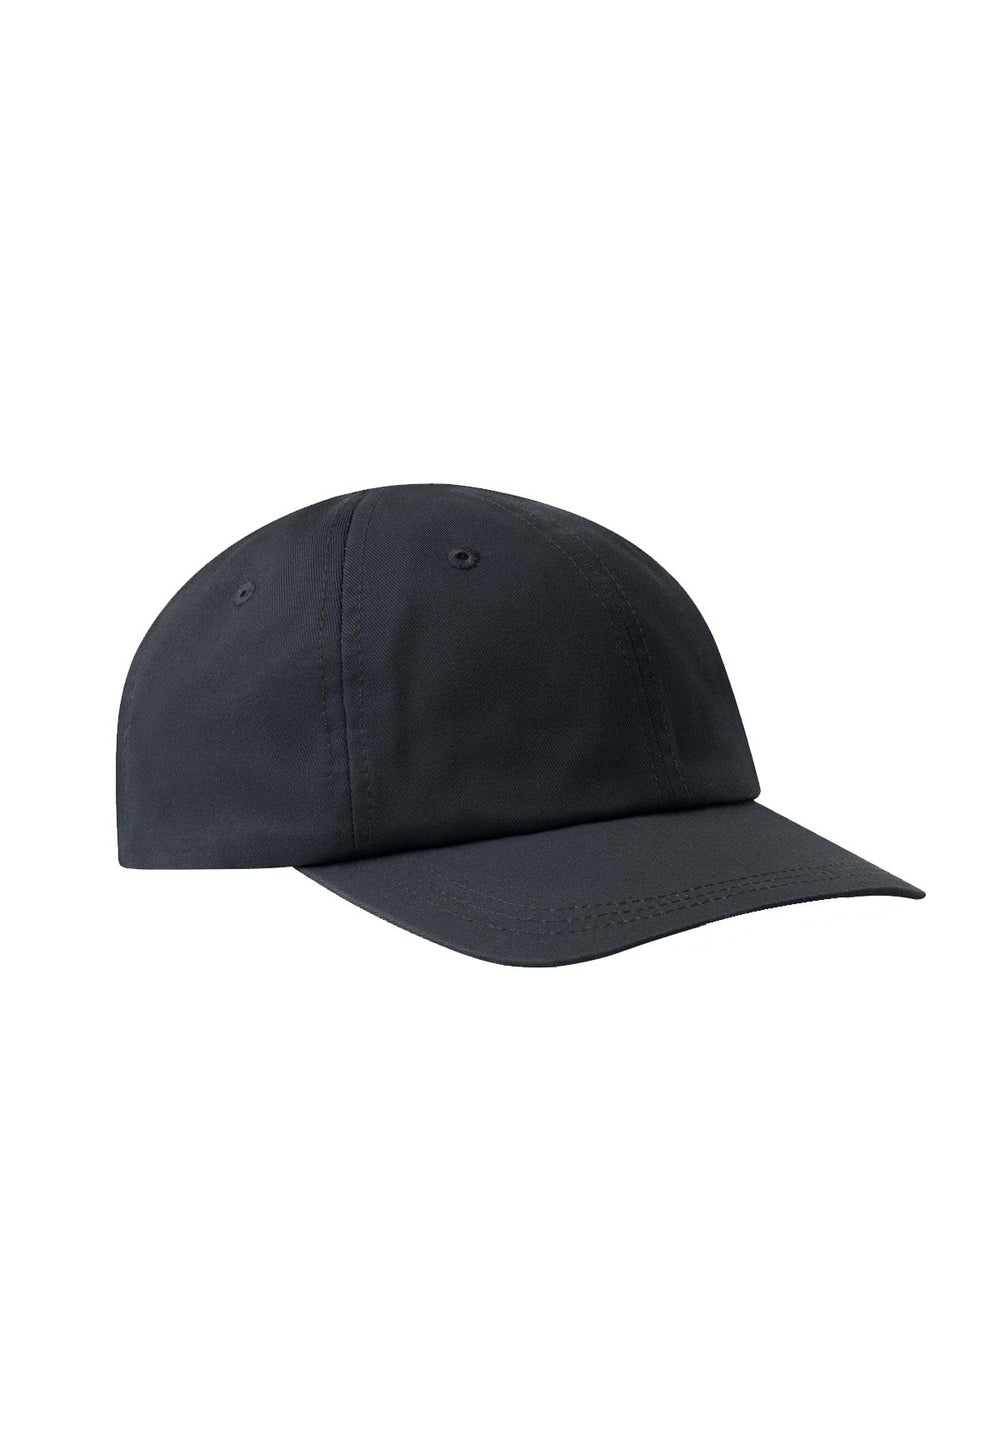 MAC CAP BLACK - Moeon